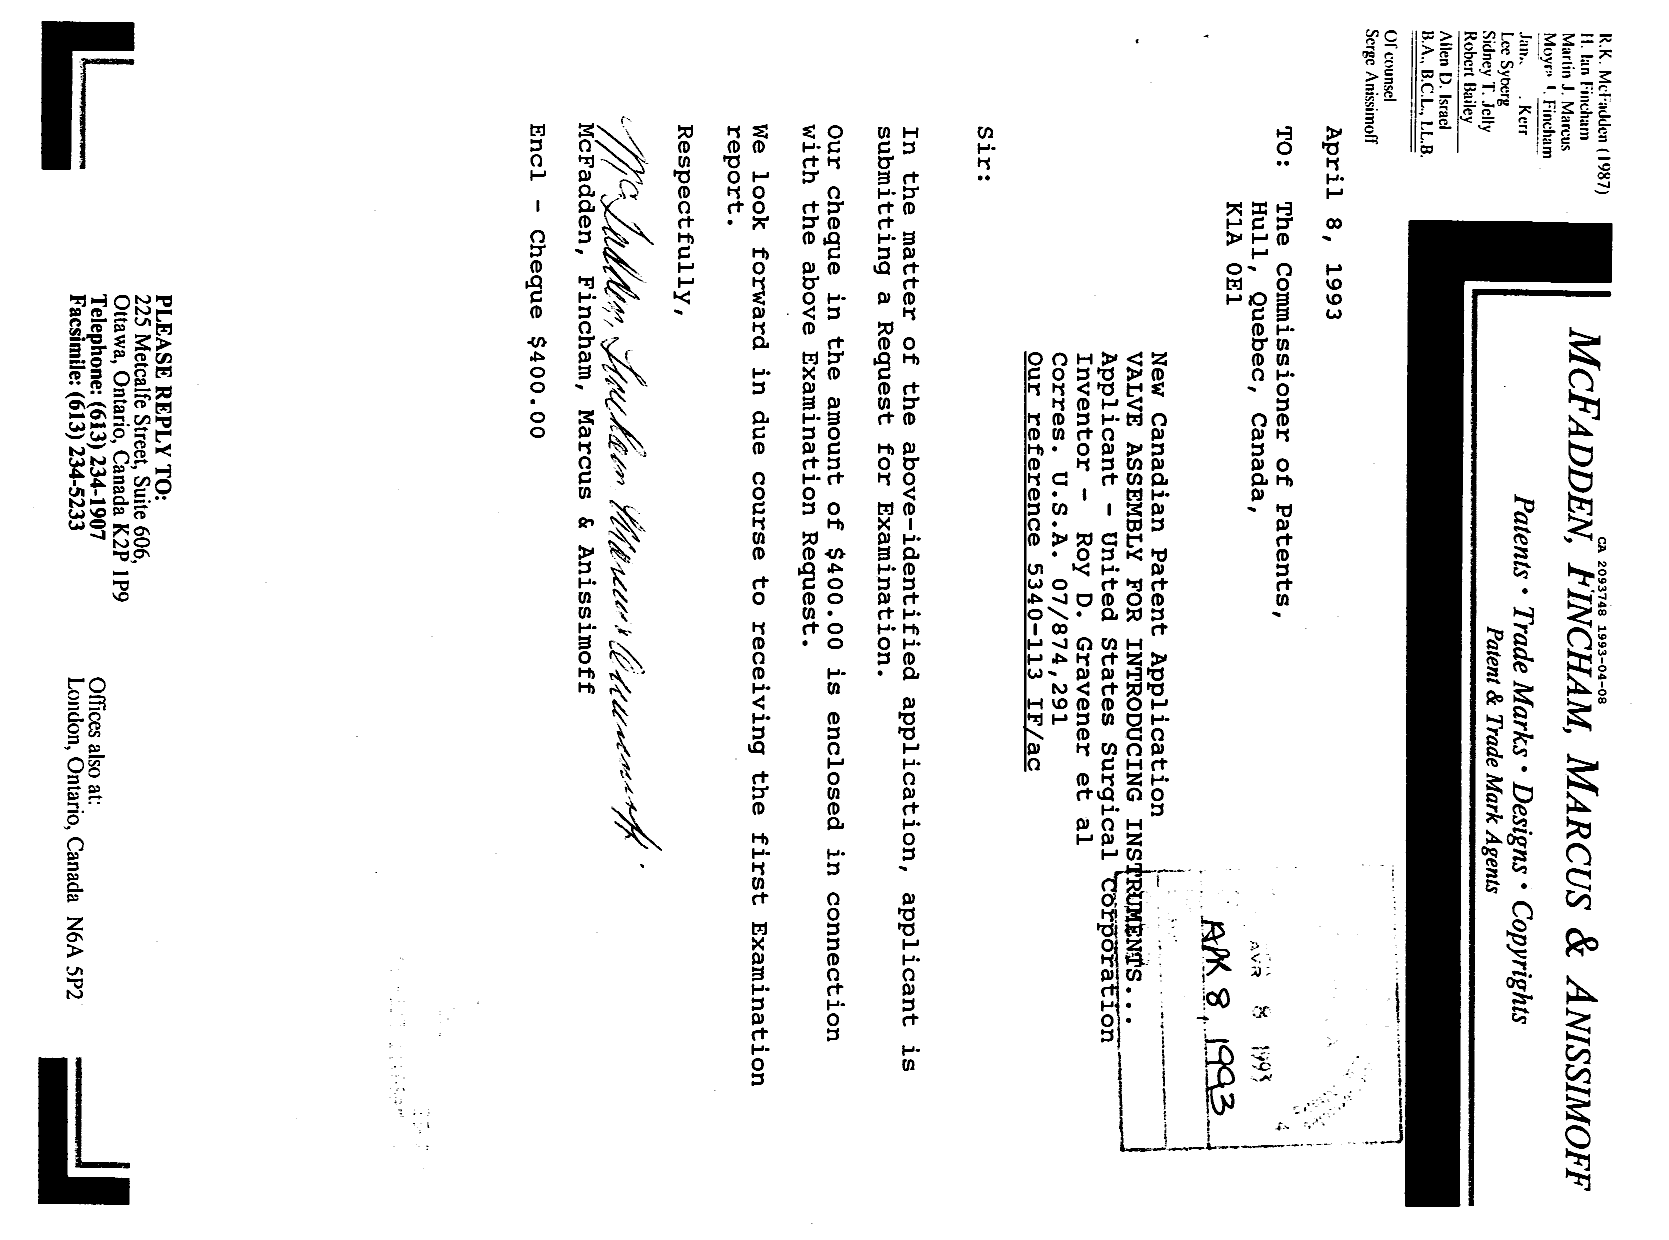 Canadian Patent Document 2093748. Prosecution Correspondence 19930408. Image 1 of 1